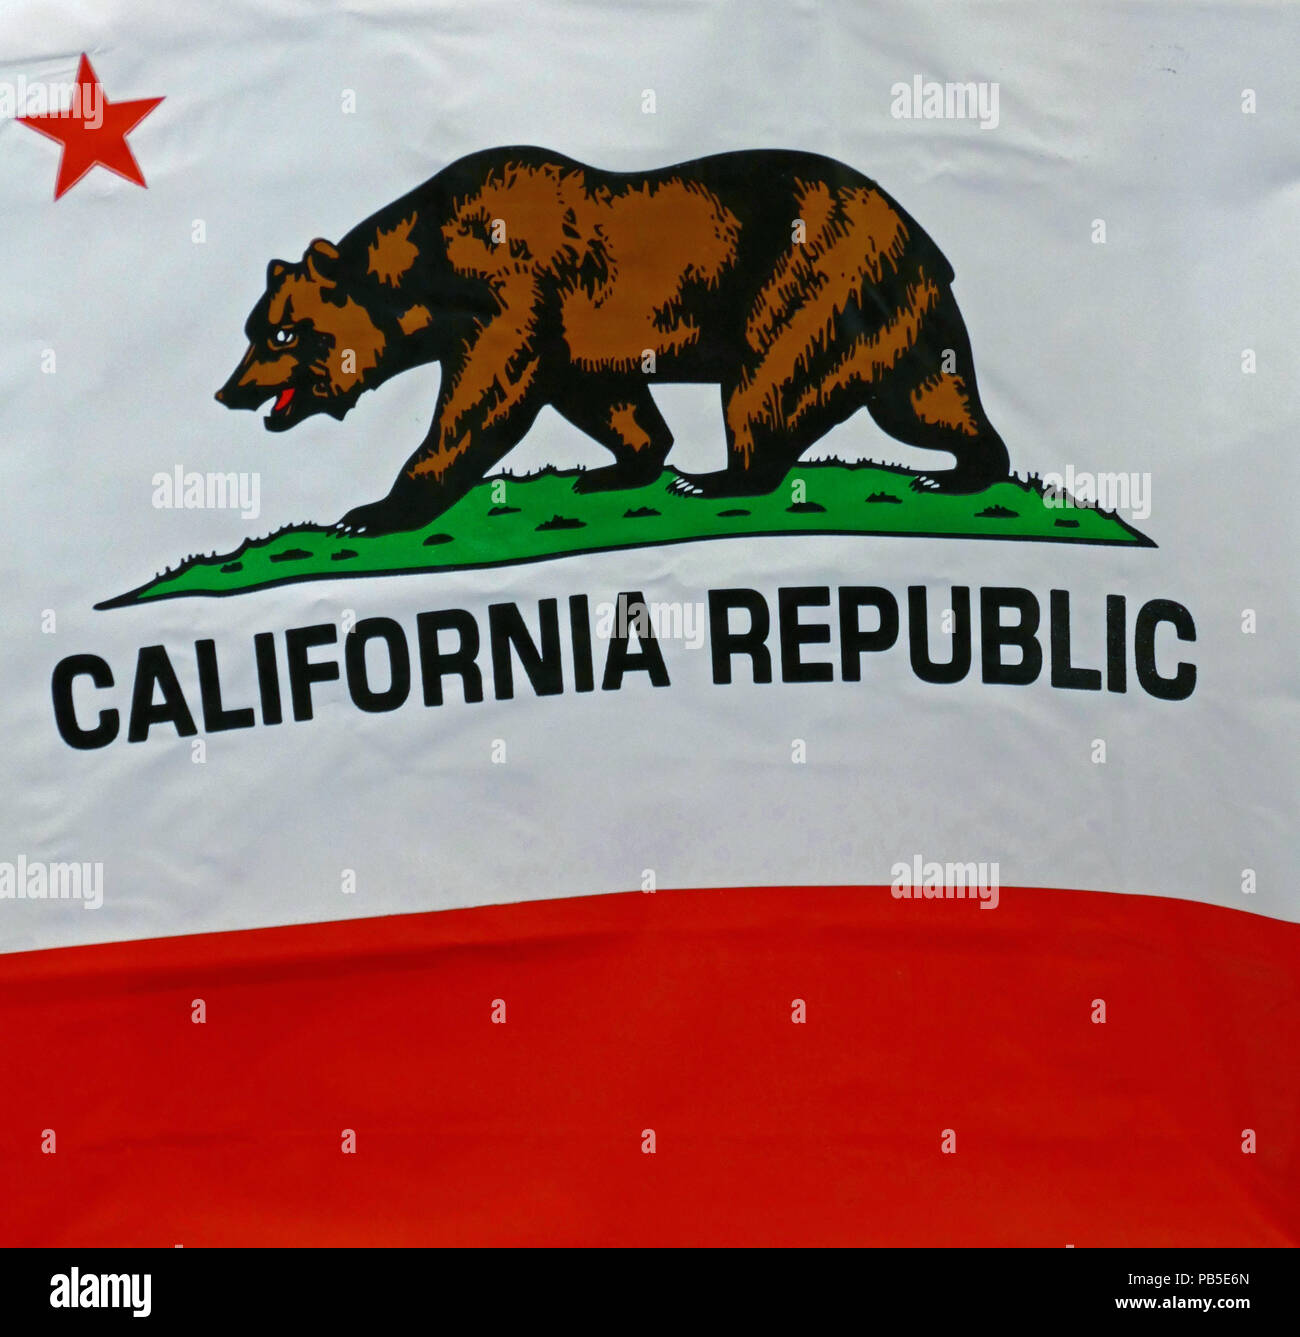 California republic flag Stock Photo